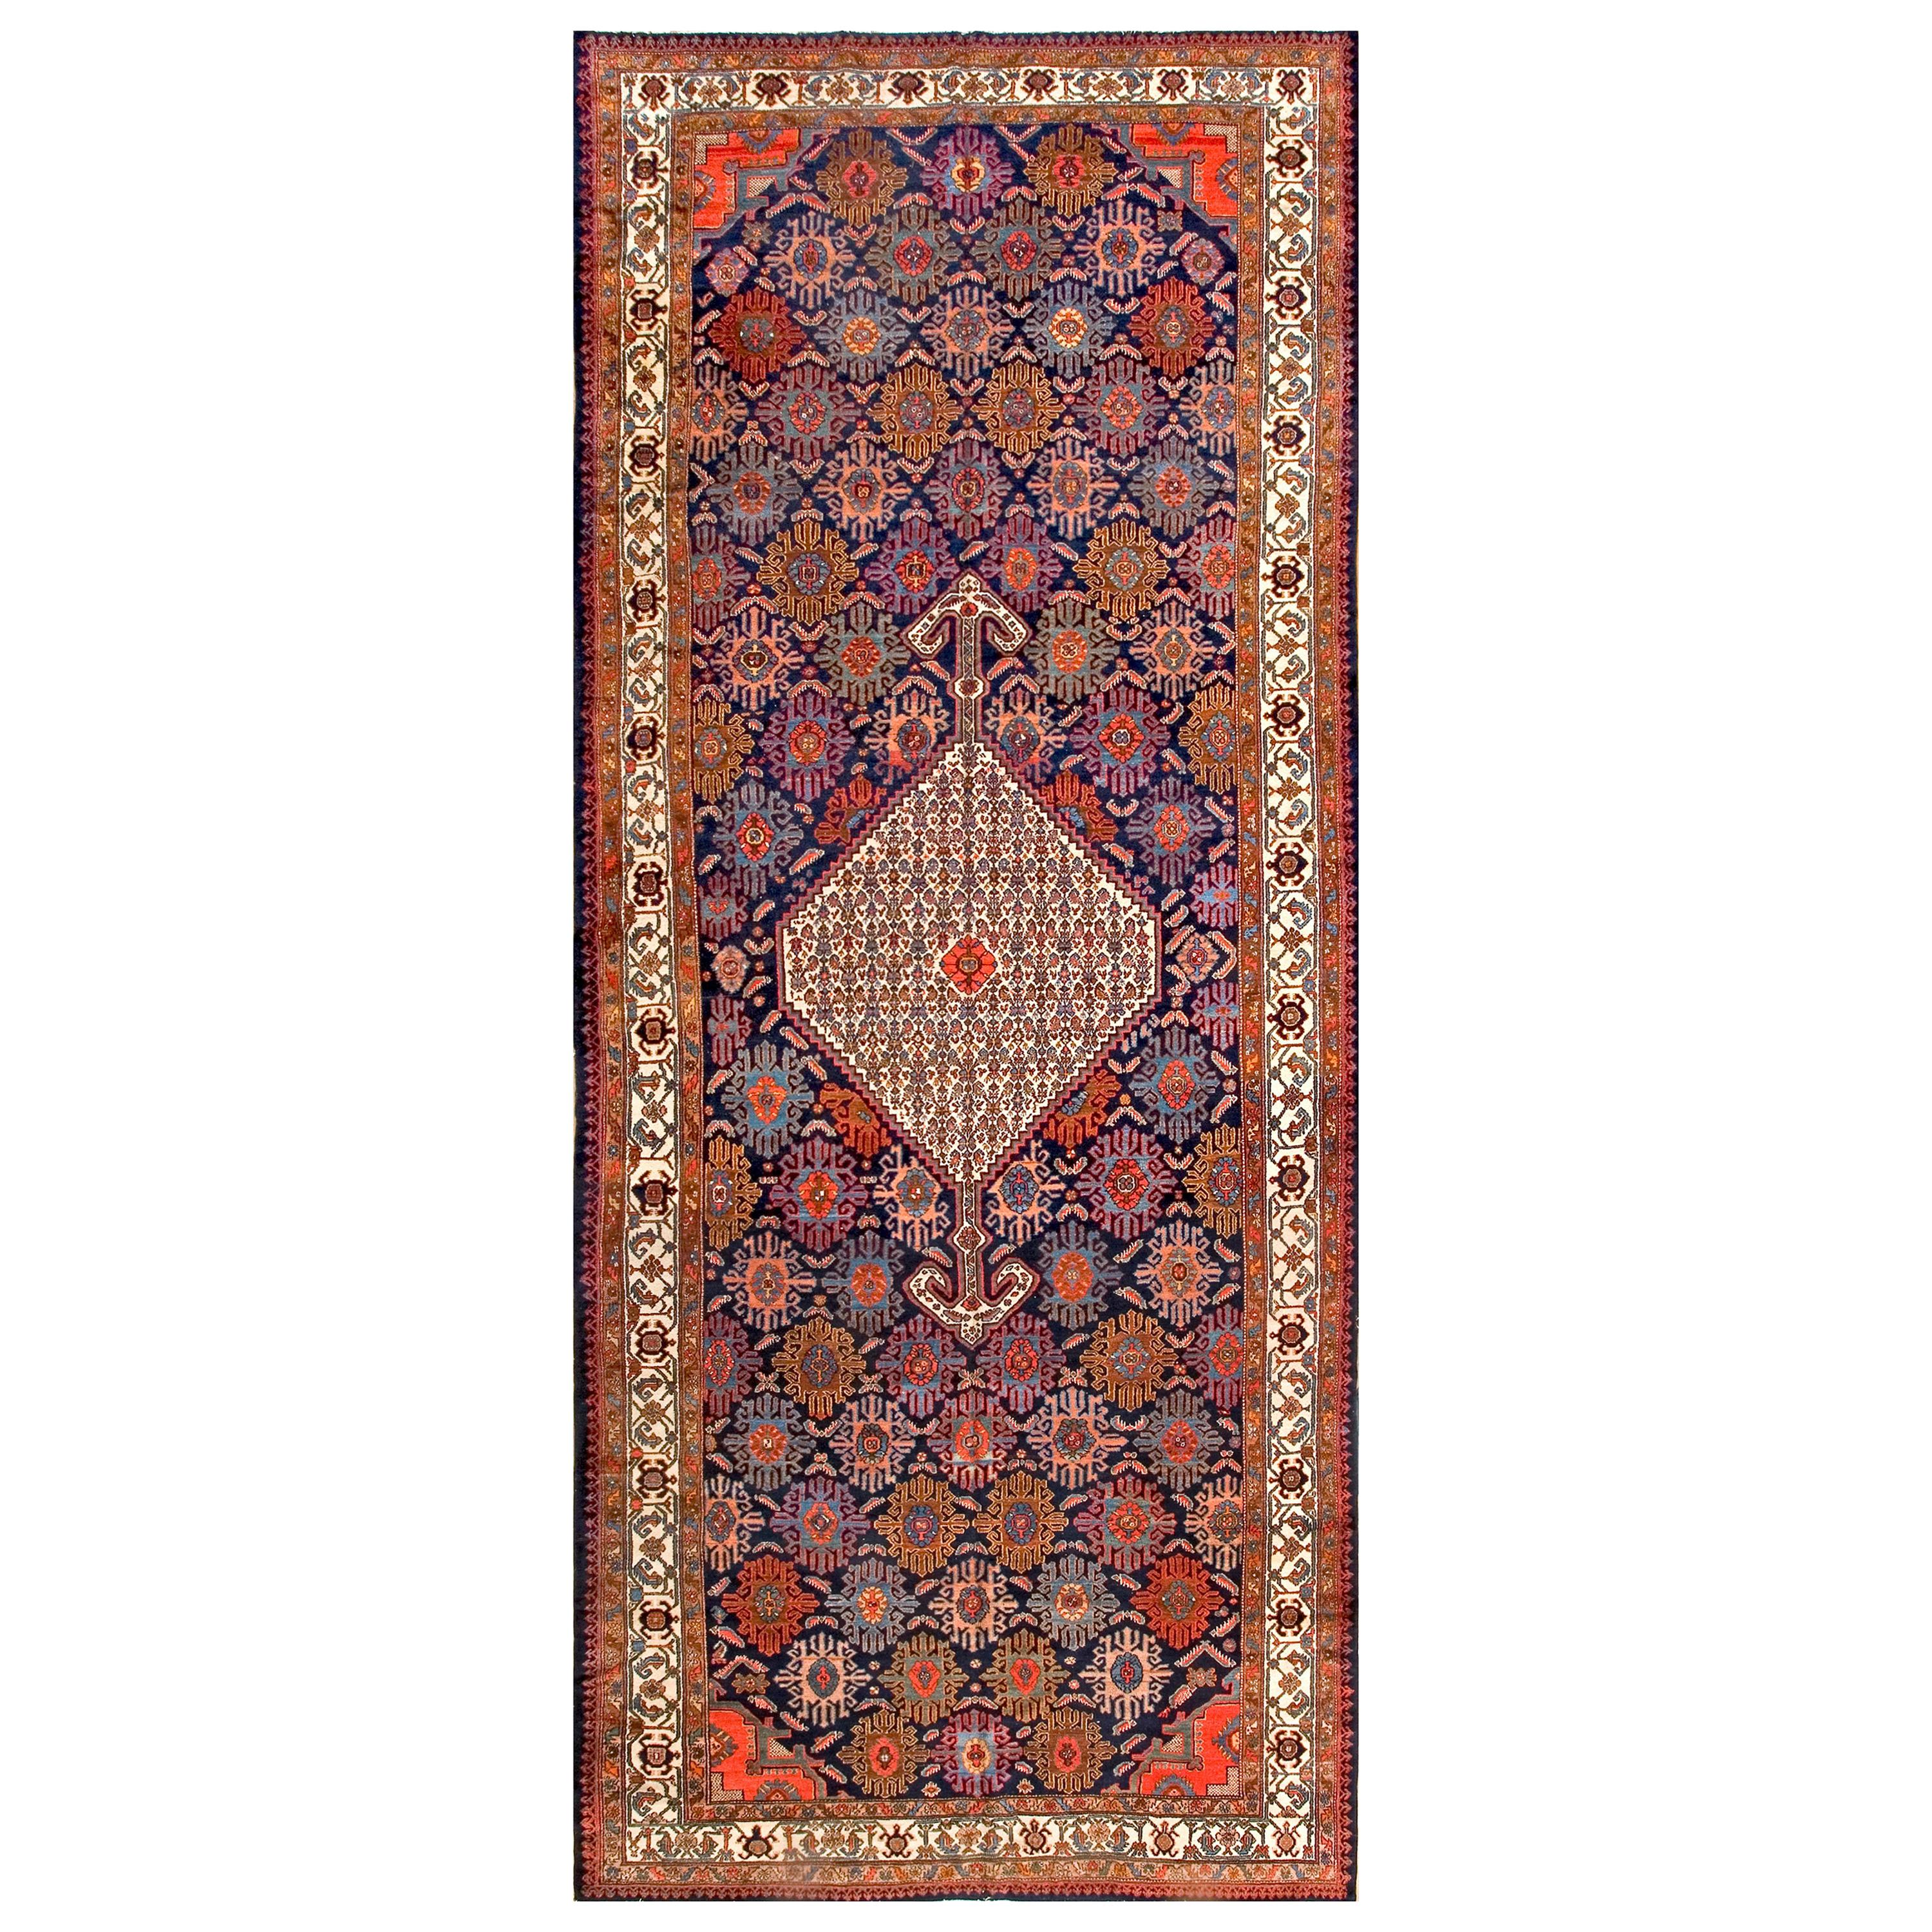 1920s Persian Bibikabad Carpet ( 7'6" x 17'4" - 228 x 528 )